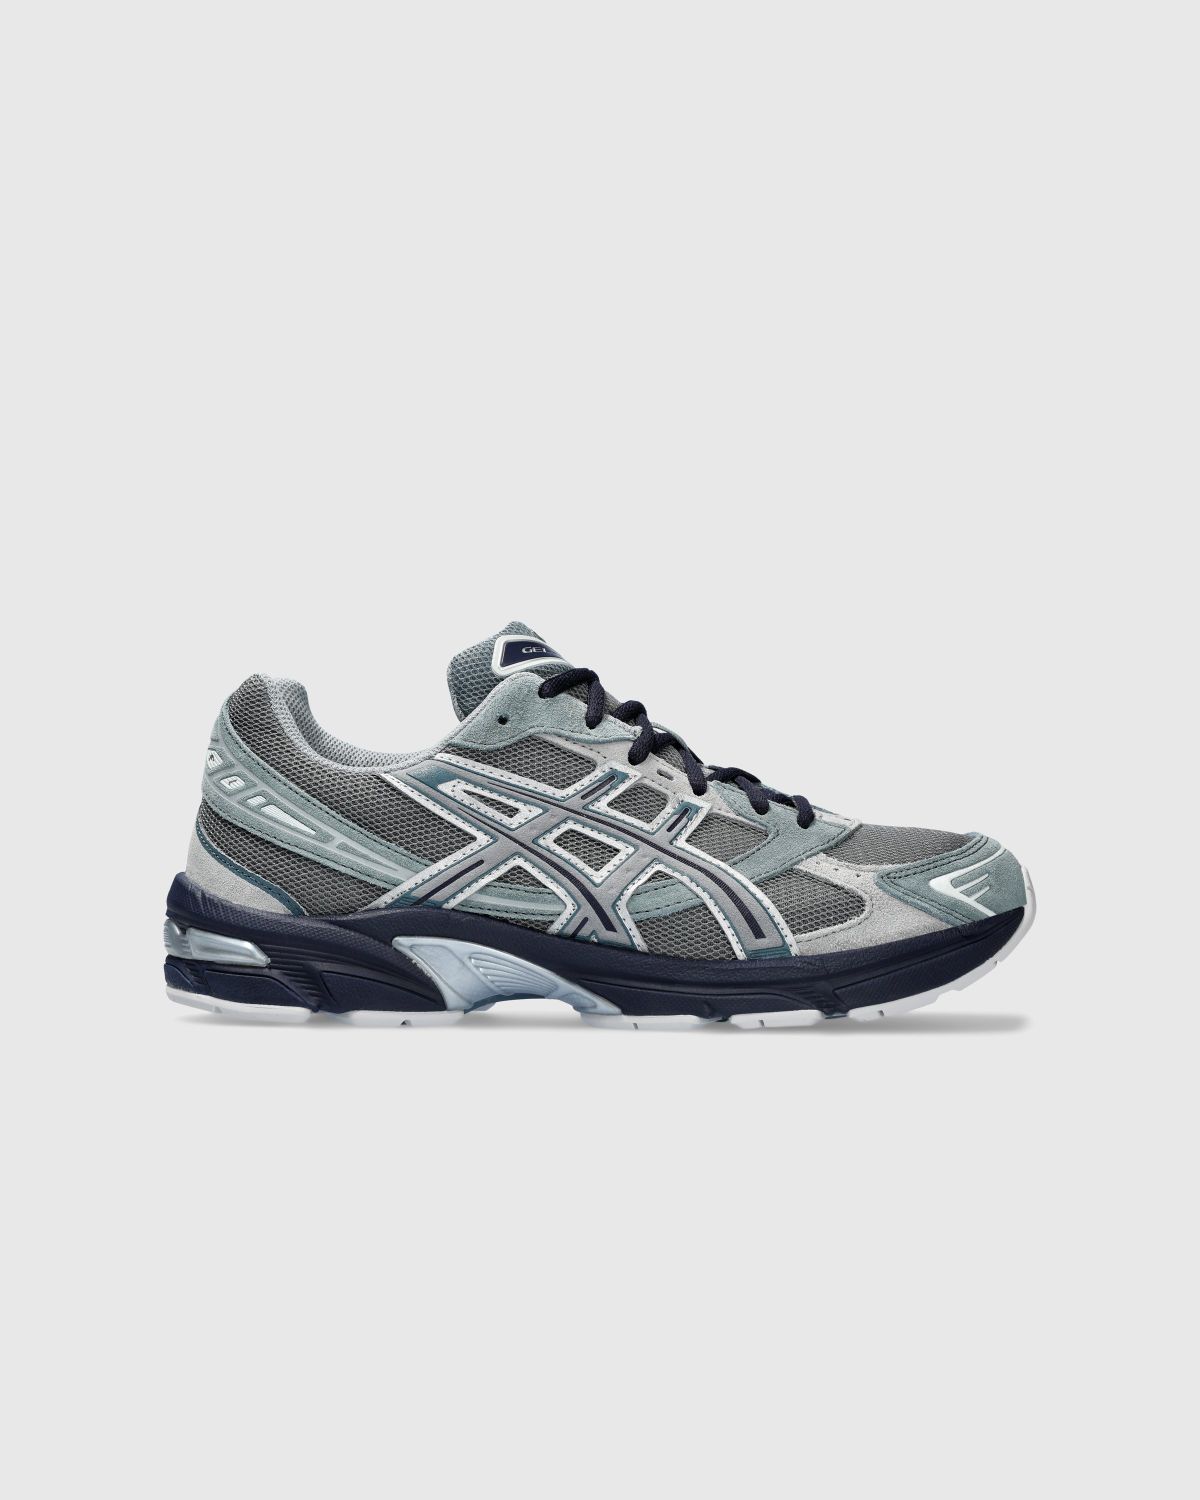 asics – GEL-1130 Steel Gray/Sheet Rock - Sneakers - Grey - Image 1